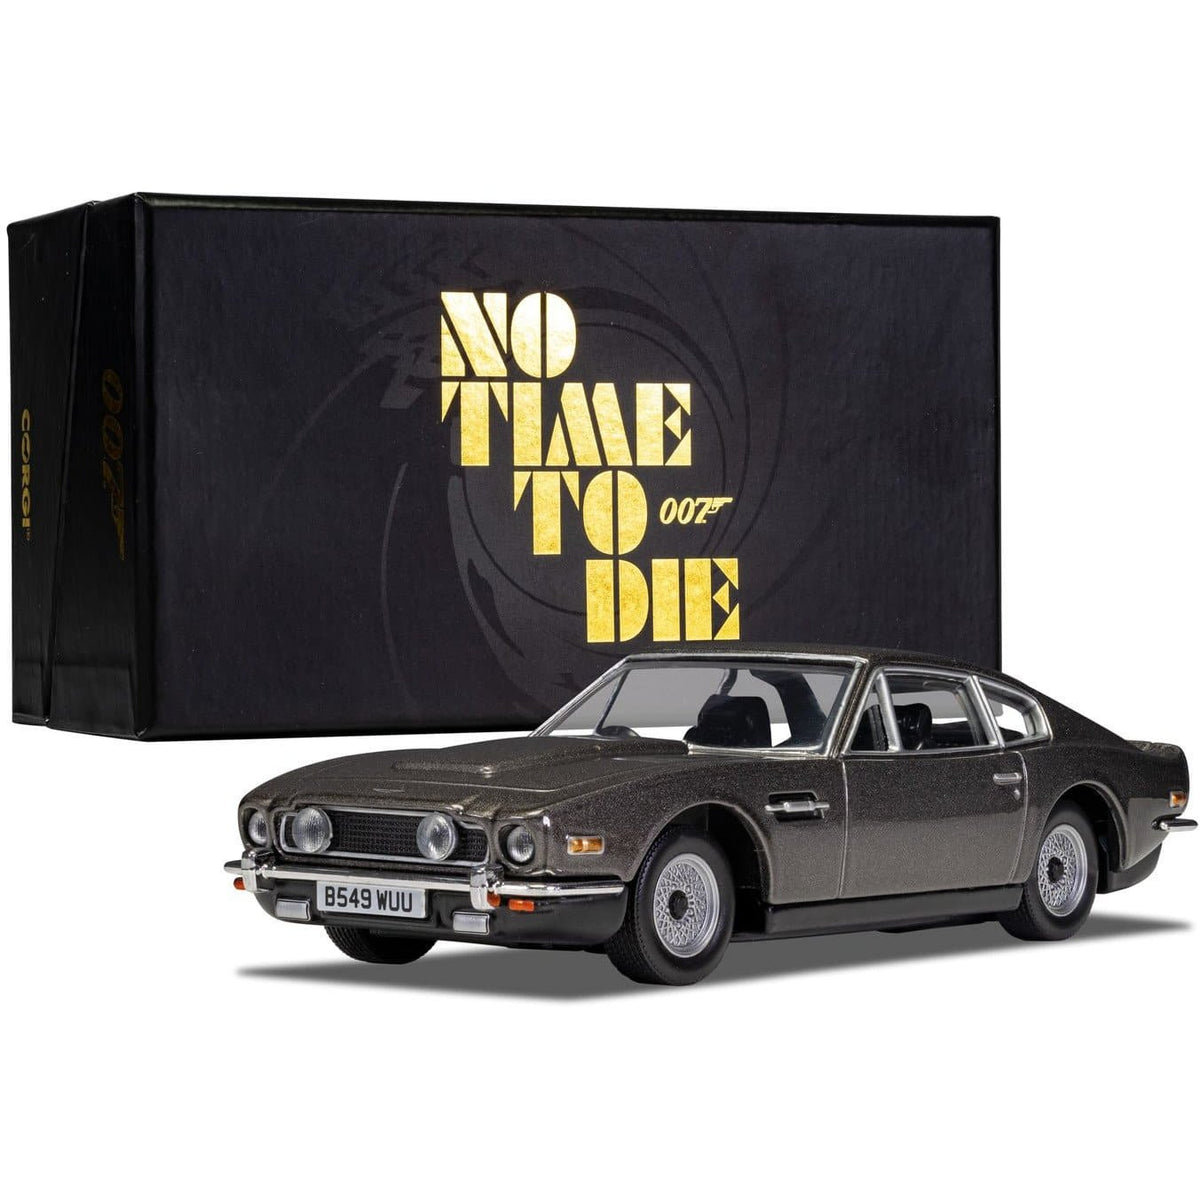 James Bond Aston Martin V8 Model Car - No Time To Die Edition - By Corgi (Pre-order) - 007STORE